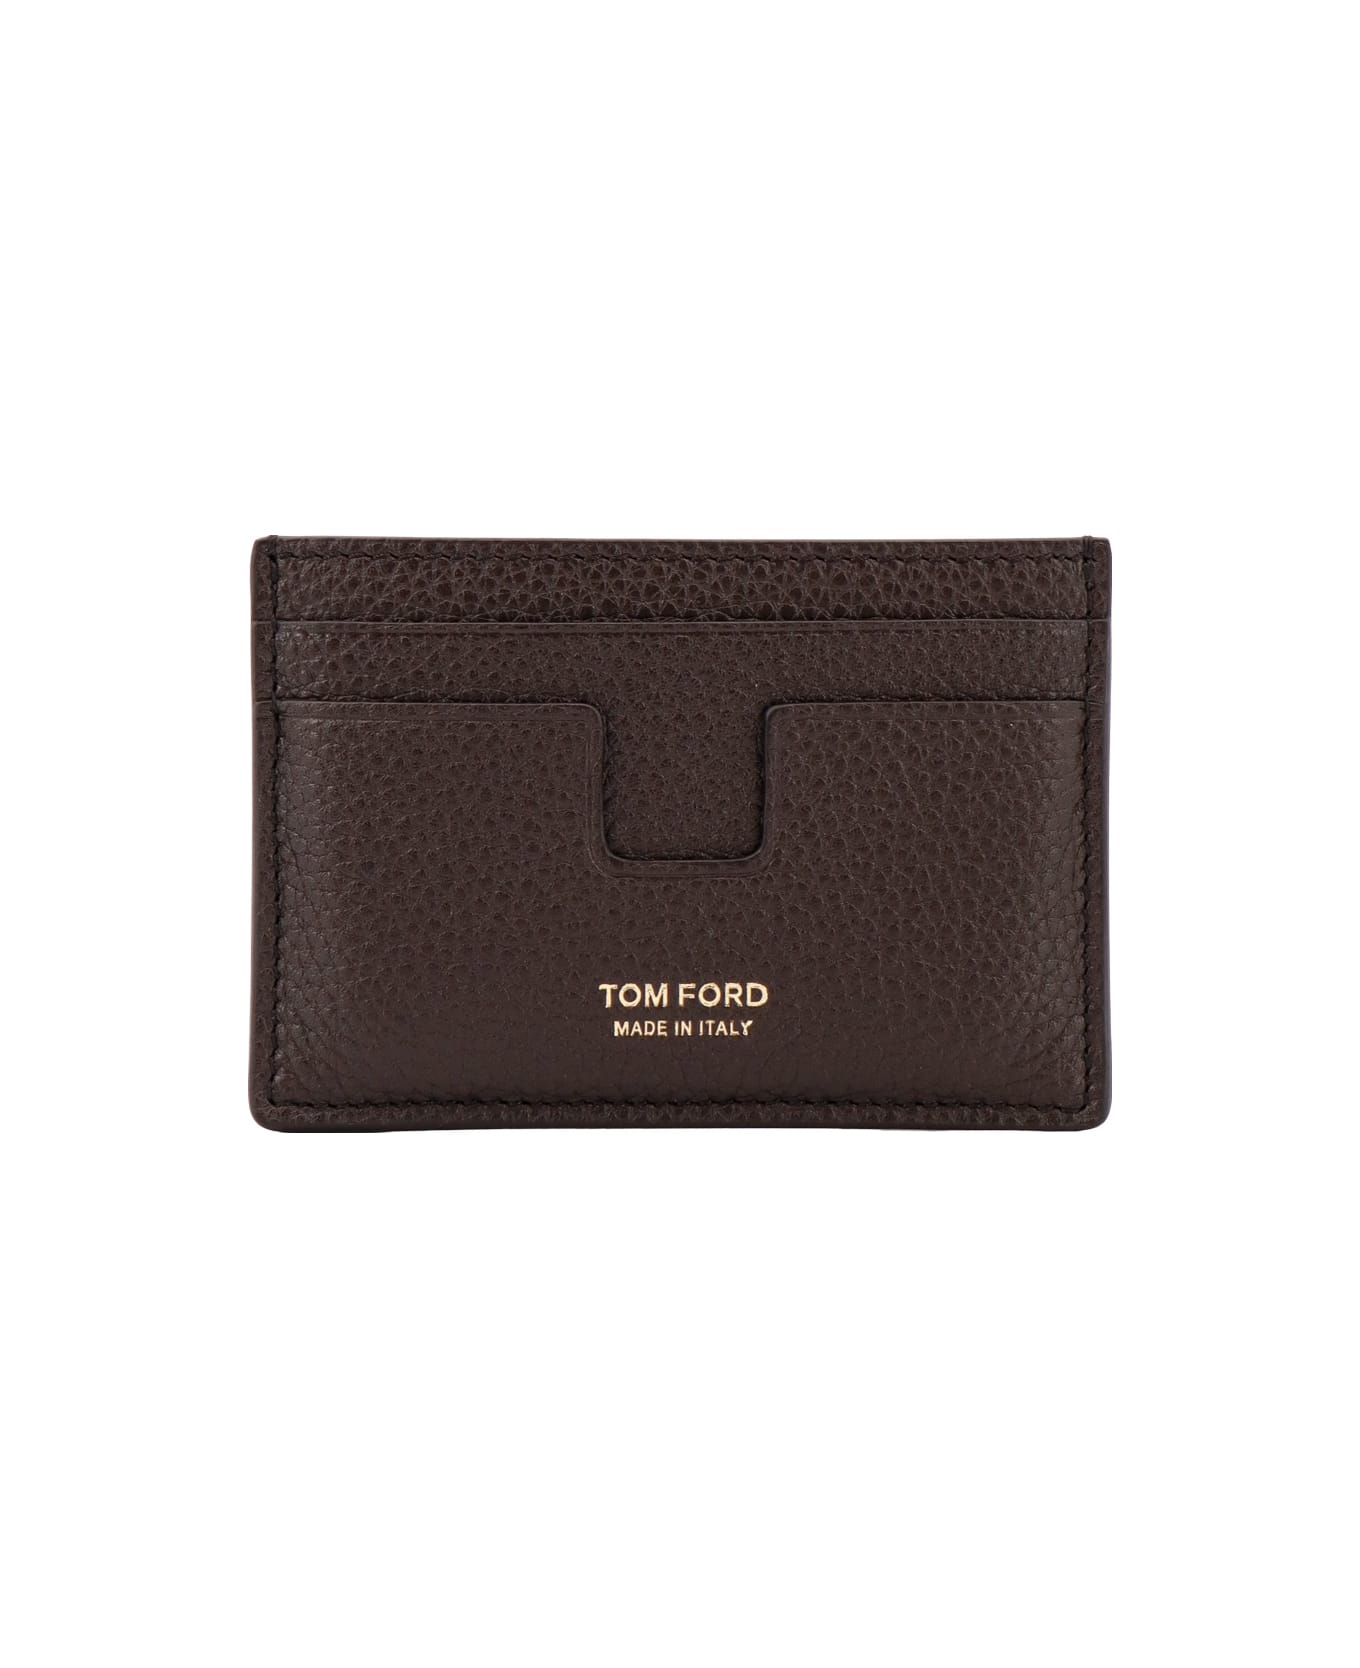 Tom Ford Wallet - Brown 財布